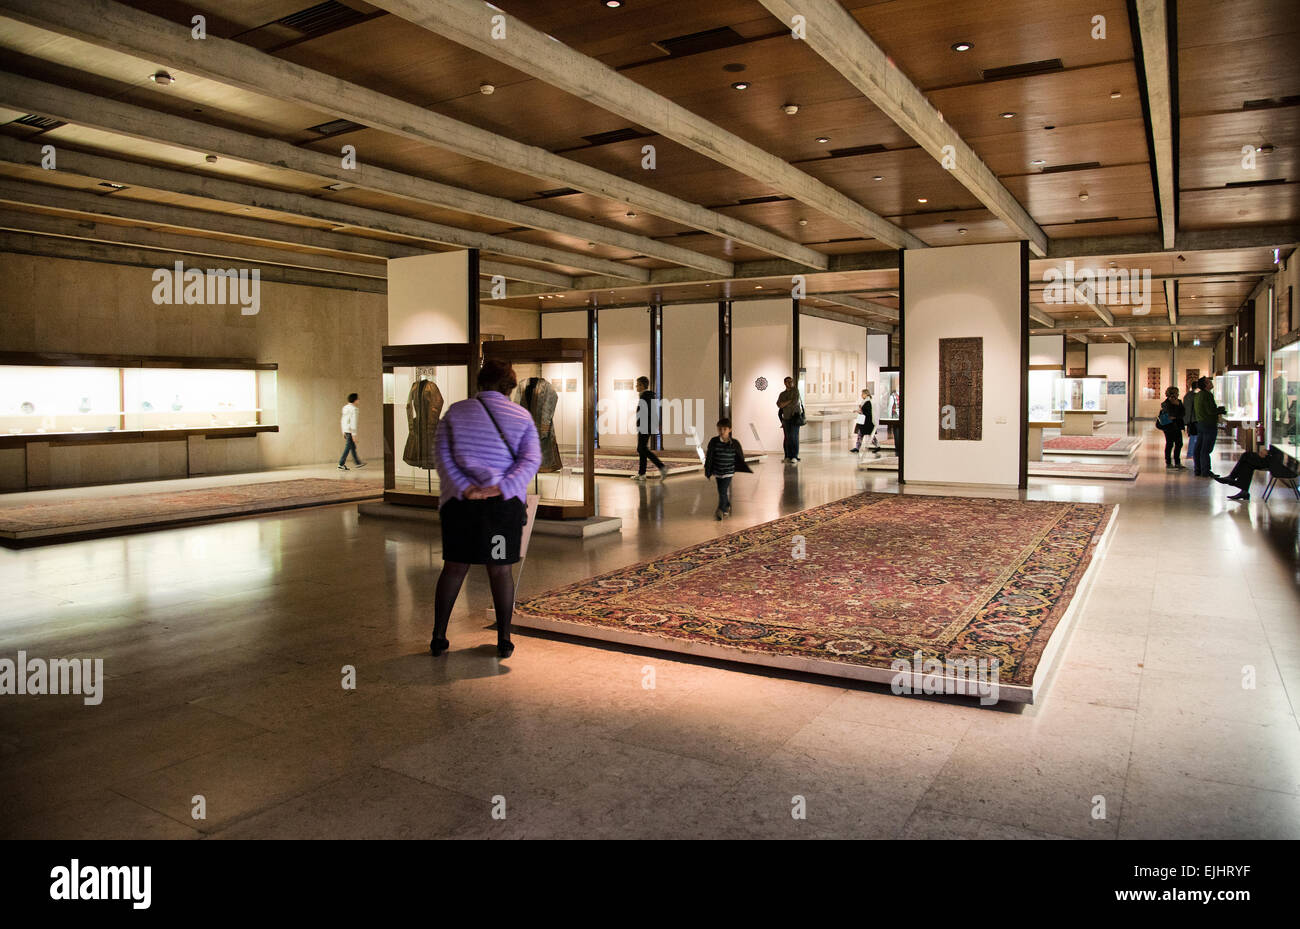 Esfahan Teppich und Exponate im Museu Calouste Gulbenkian - Lissabon Portugal Stockfoto